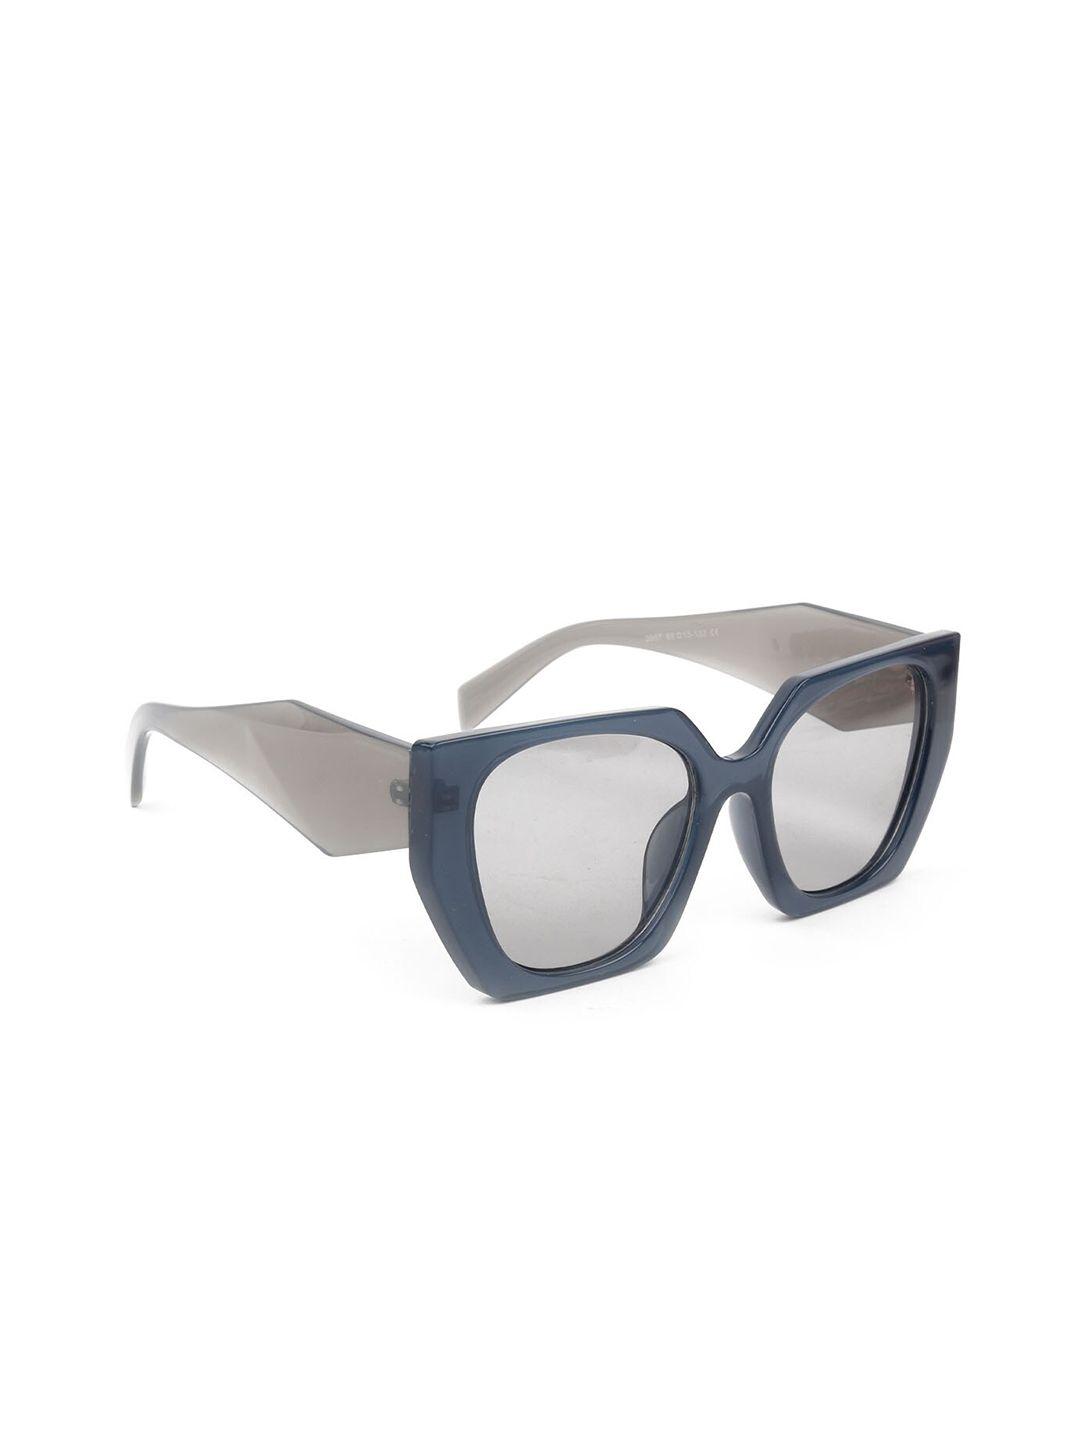 odette women oversized sunglasses with uv protected lens atm59